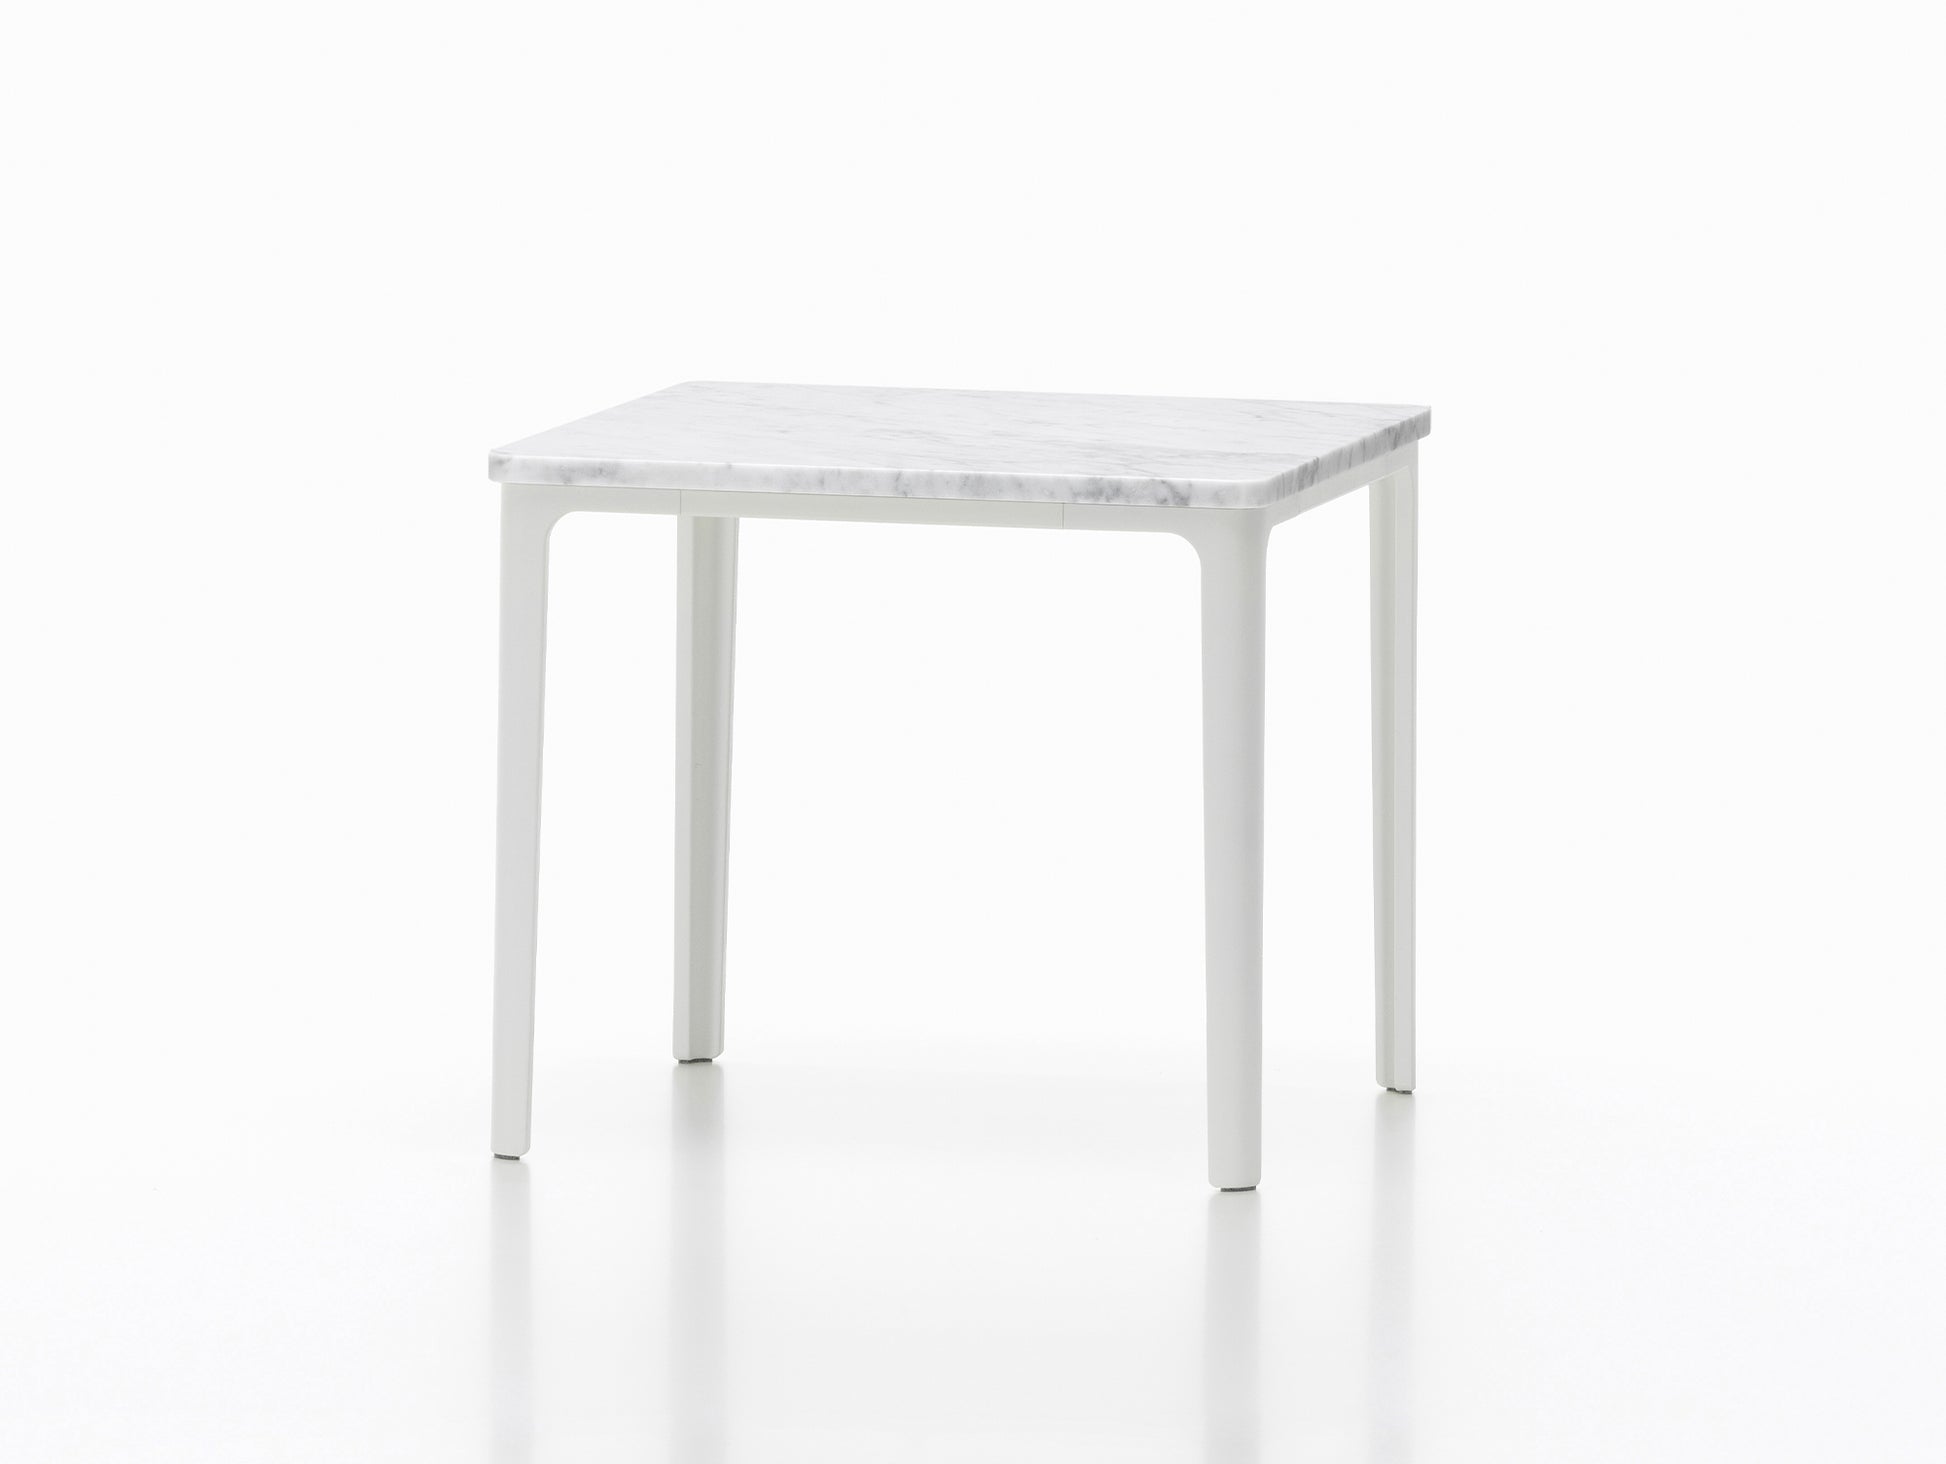 Plate Coffee Table by Vitra - Width: 41 cm / Depth: 41 cm, White Aluminium Base, Carrara Marble Tabletop